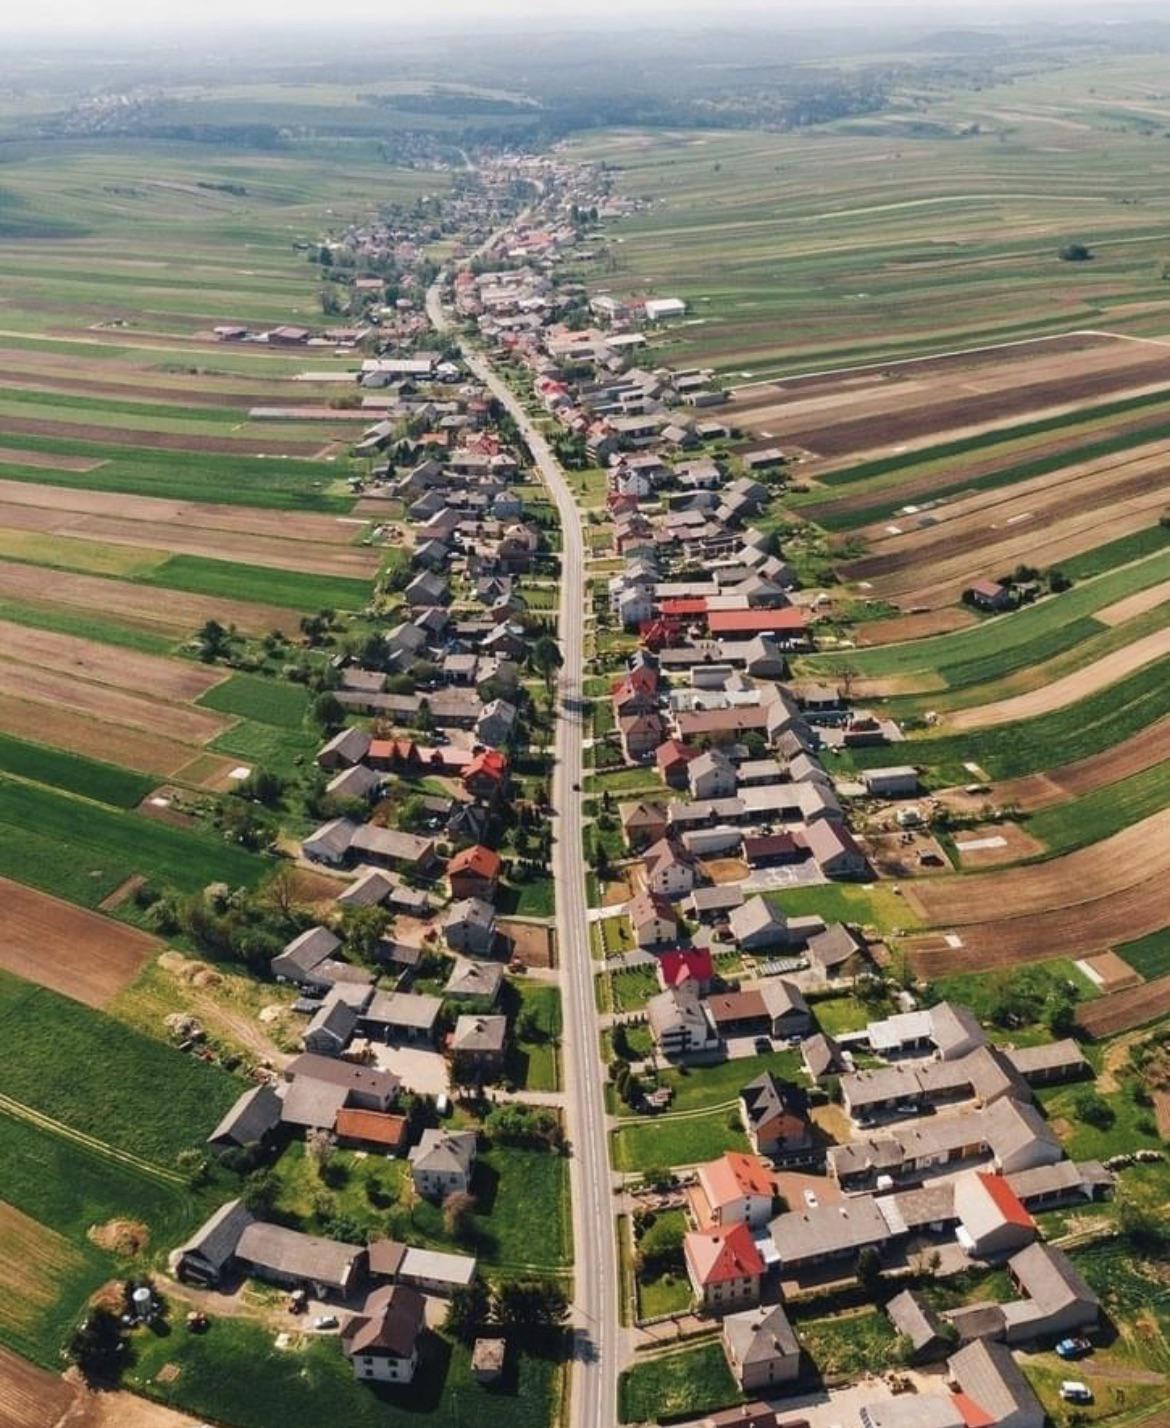 Suloszowa, Poland - All 5800 residents live on the same street